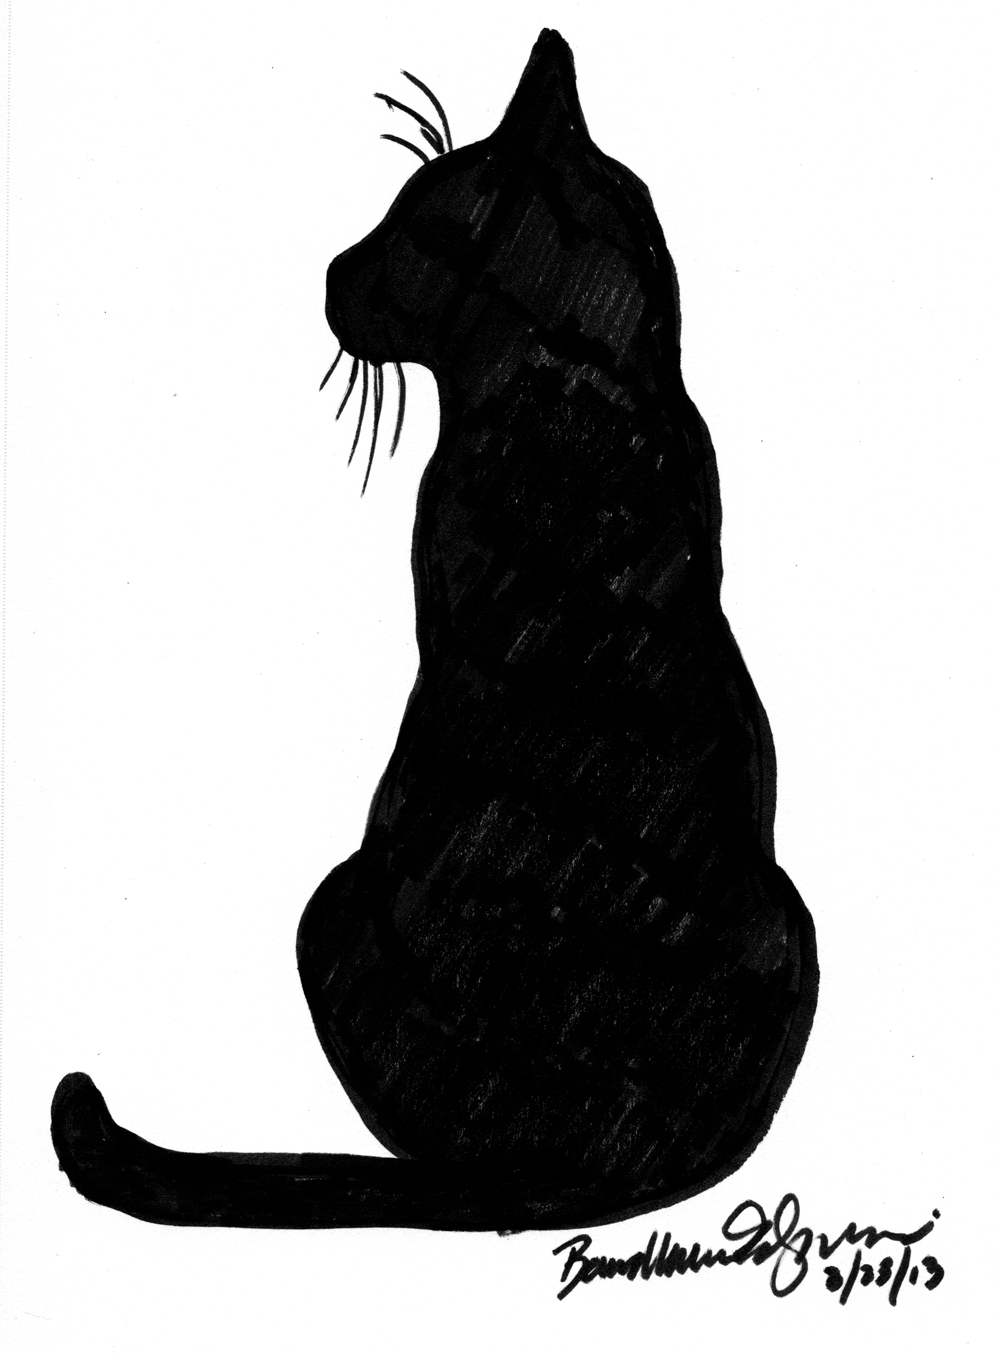 black cat outline drawing